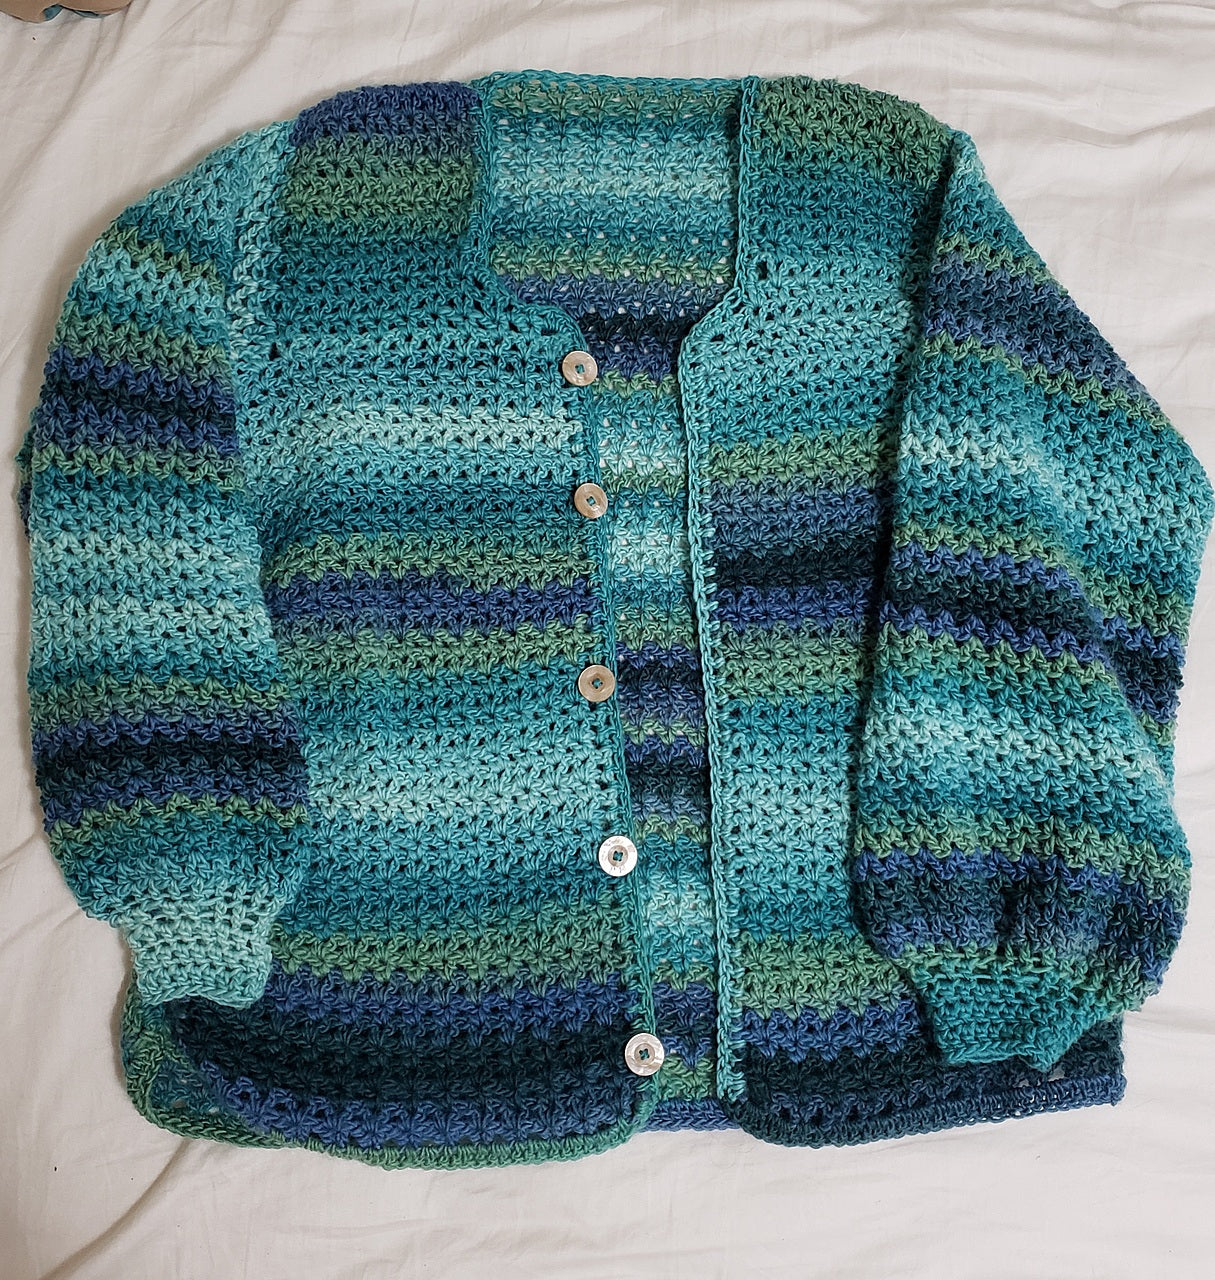 worsted weight crochet cardigan pattern pdf. easy crochet cardigans for beginners. Crochet sweater pattern